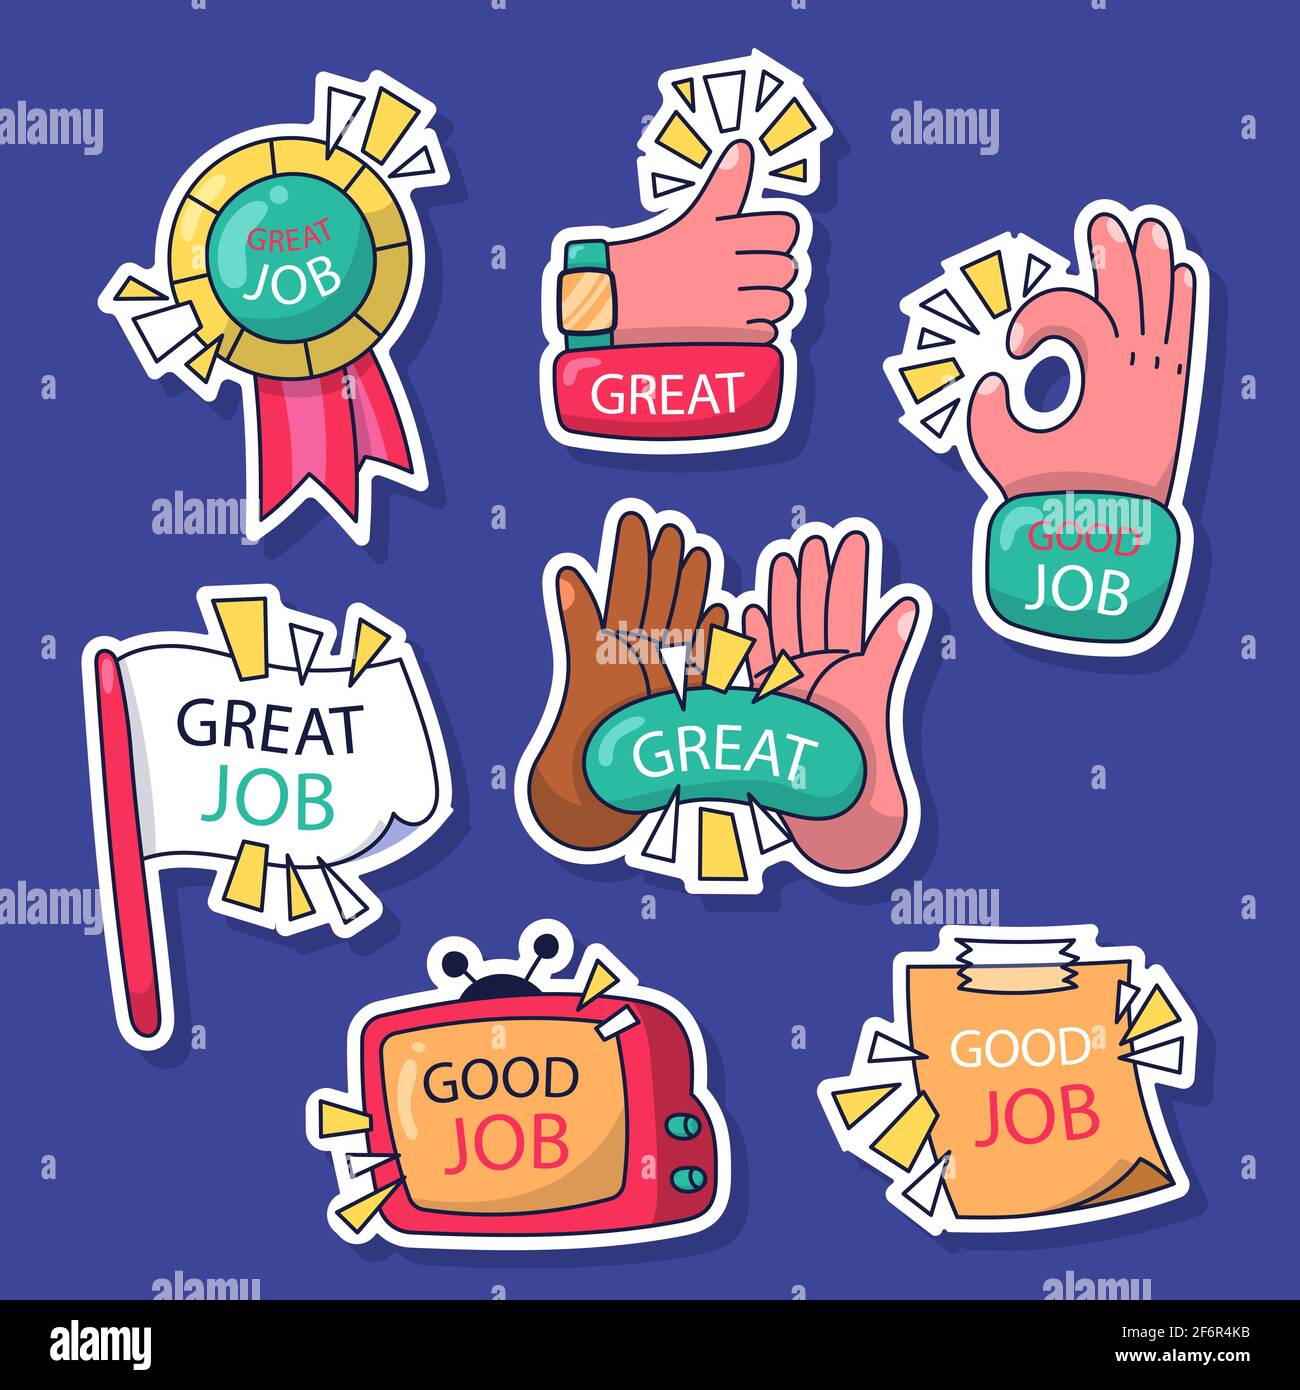 https://c8.alamy.com/comp/2F6R4KB/set-of-good-job-and-great-job-stickers-vector-illustration-2F6R4KB.jpg